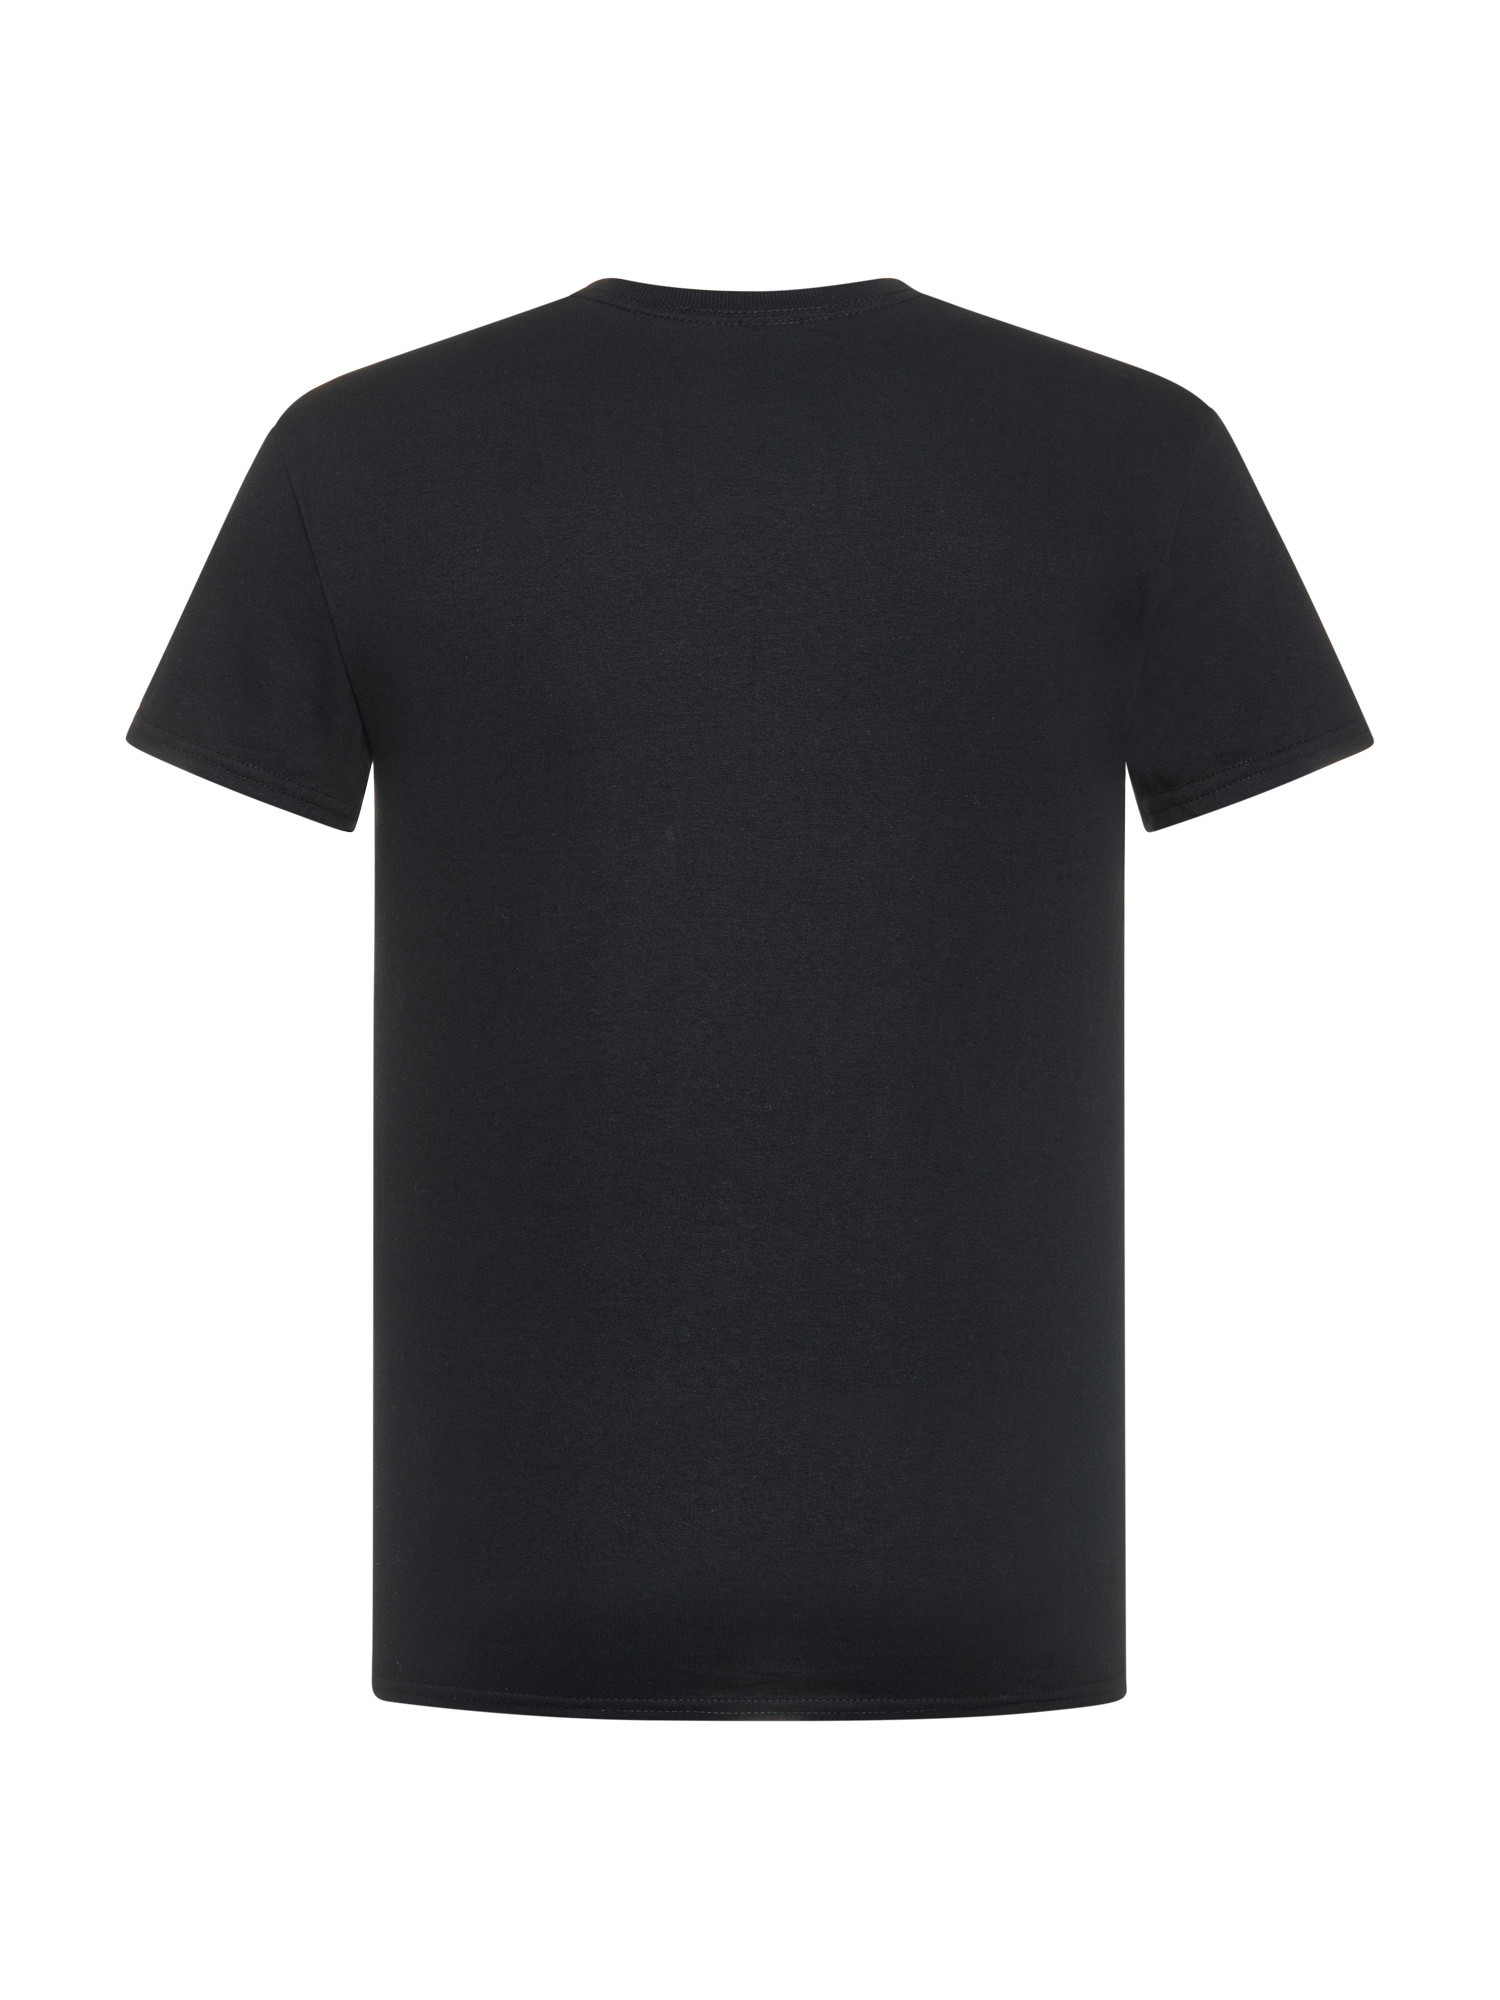 Thrasher - T-Shirt with outlined logo, Black, large image number 1